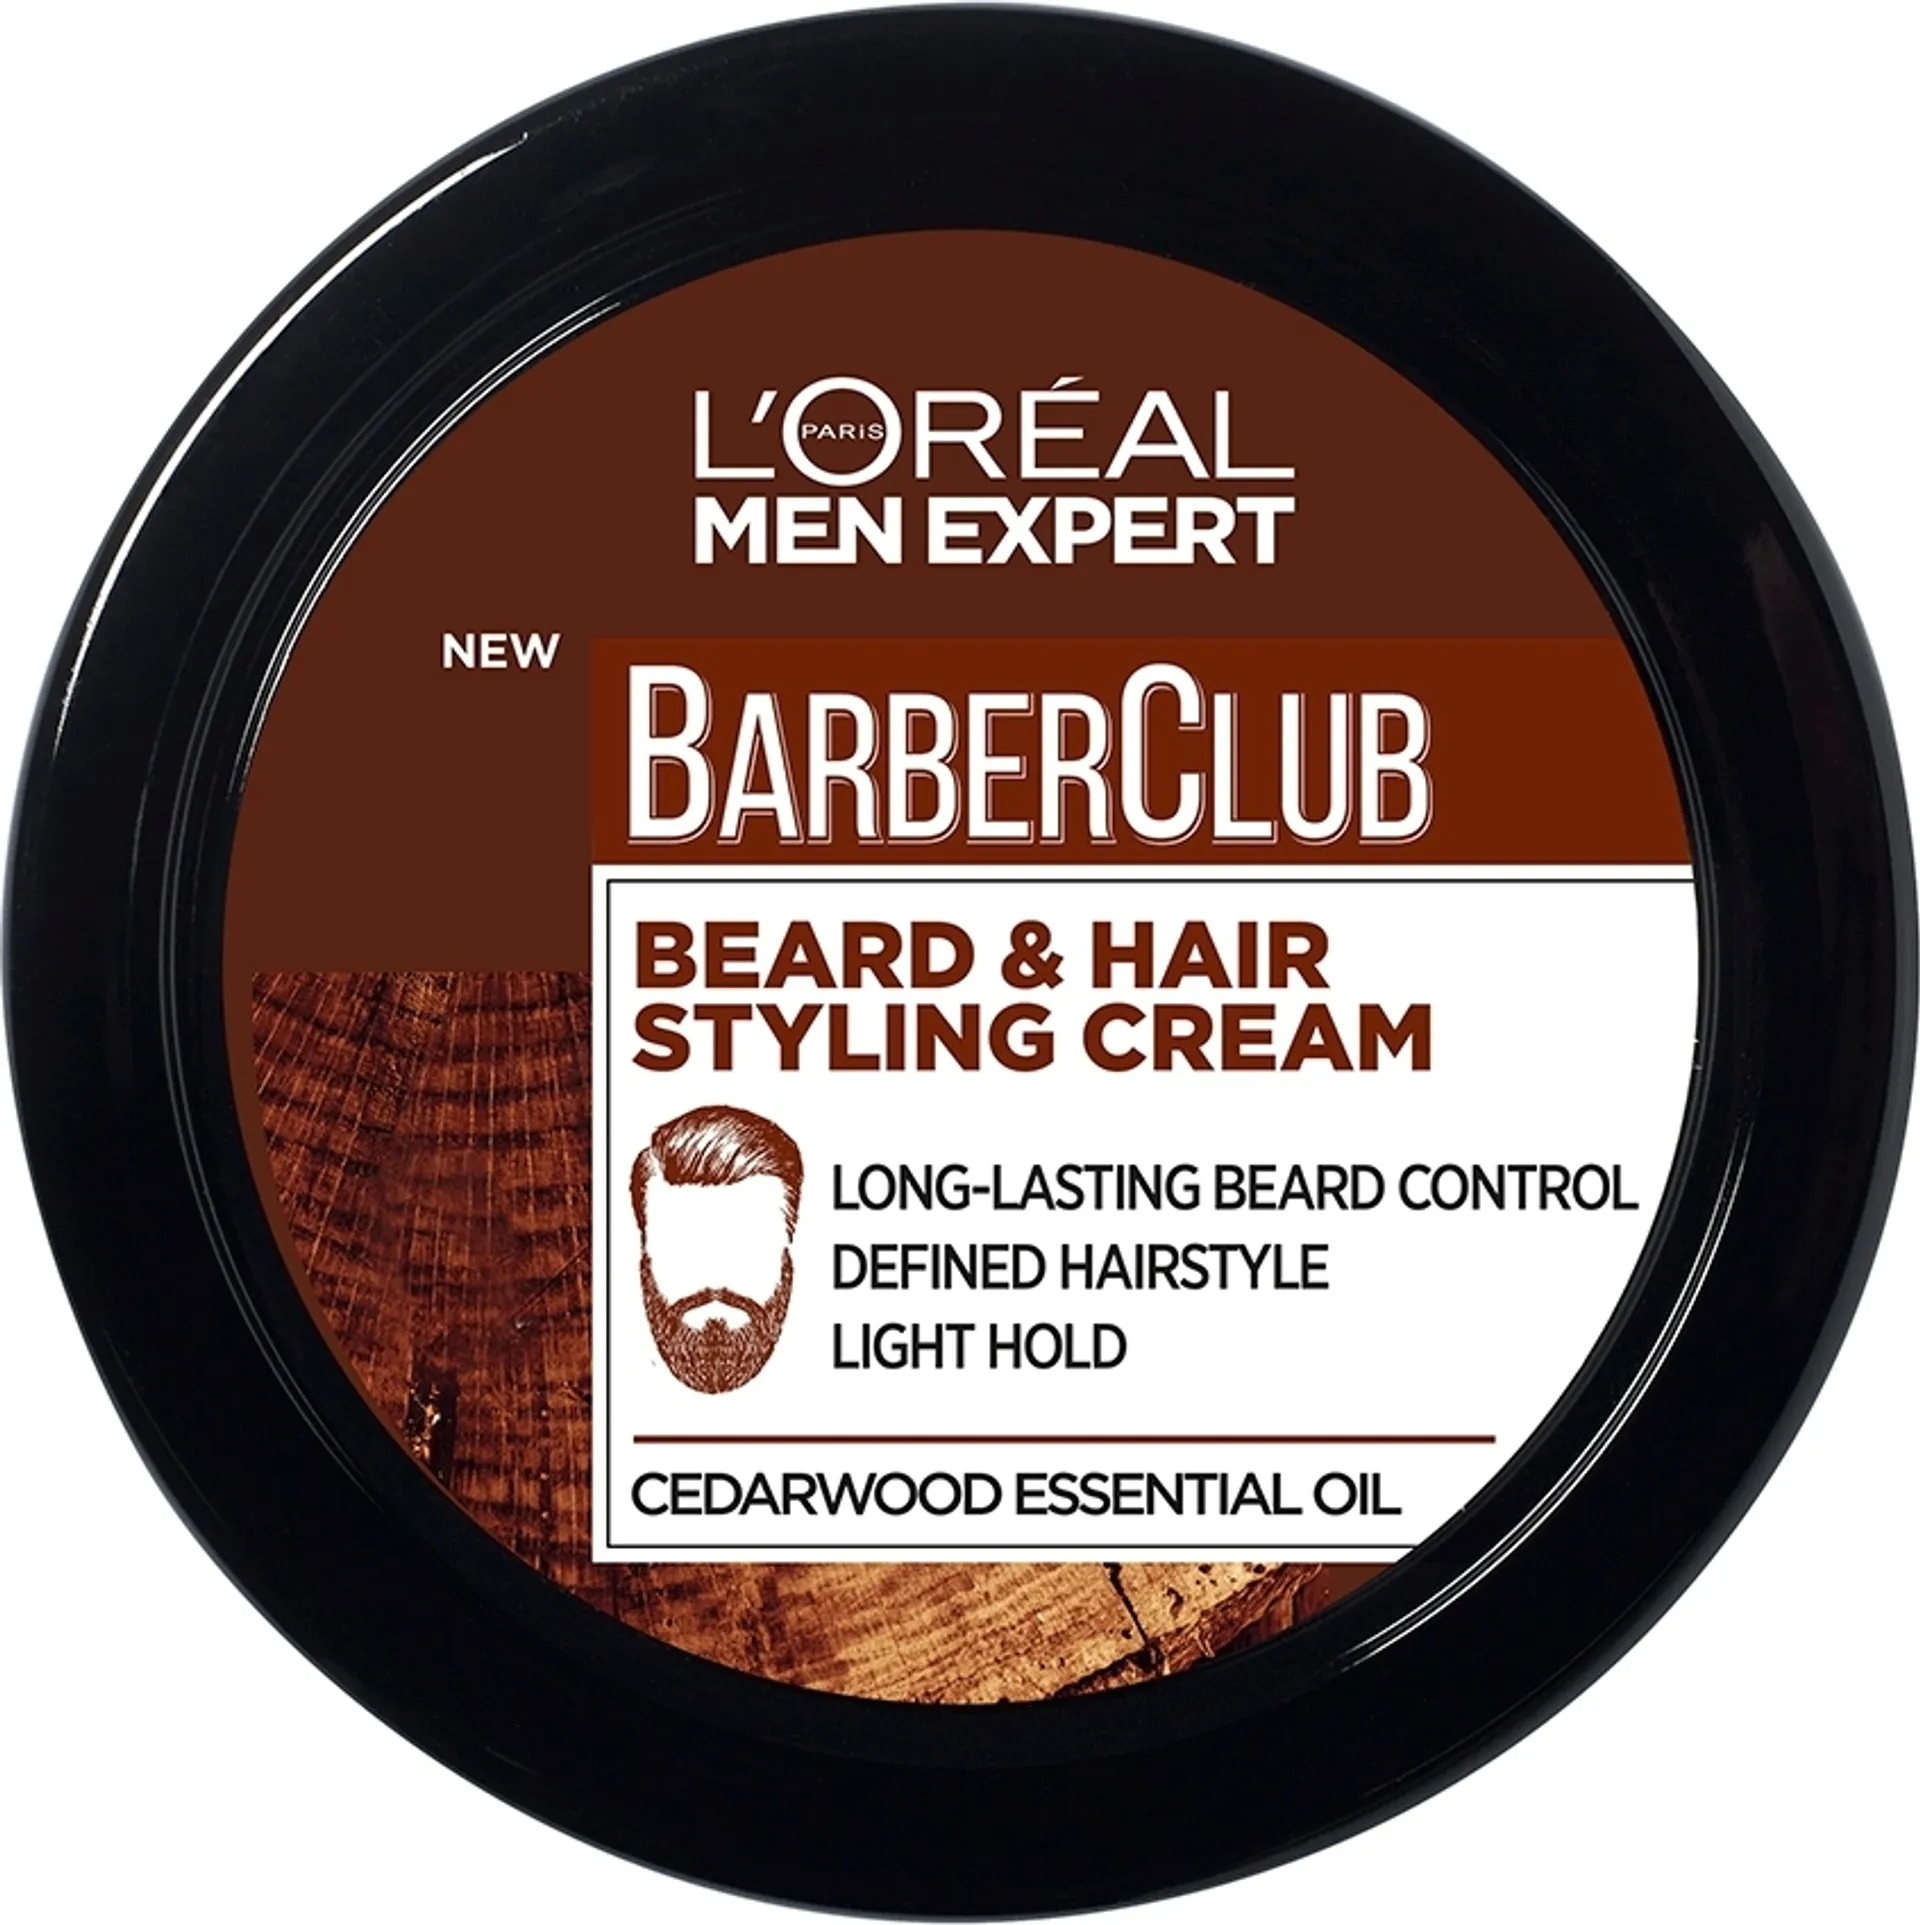 L'Oréal Paris Men Expert Barber Club Beard & Hair Styling Cream parran ja hiustenmuotoiluvoide 75ml - 1